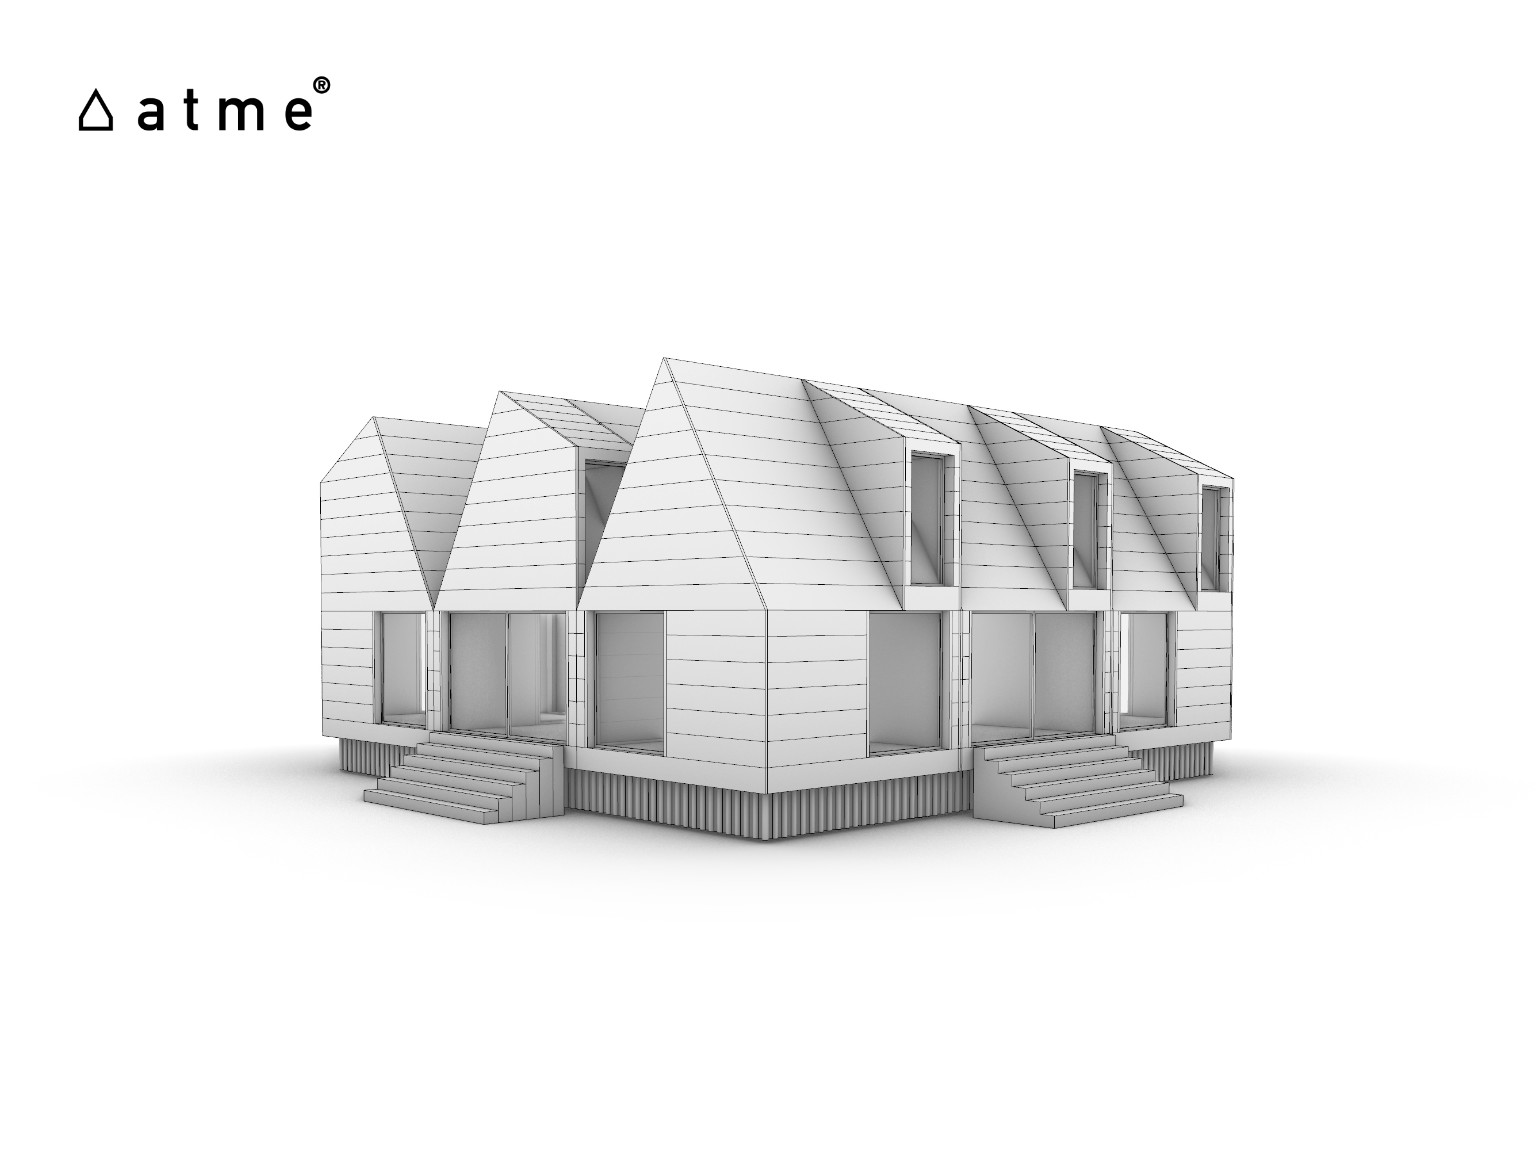 holzbau-bungalow-atrium-atme-bausatz-schraubfundamente-tinyhaus-1